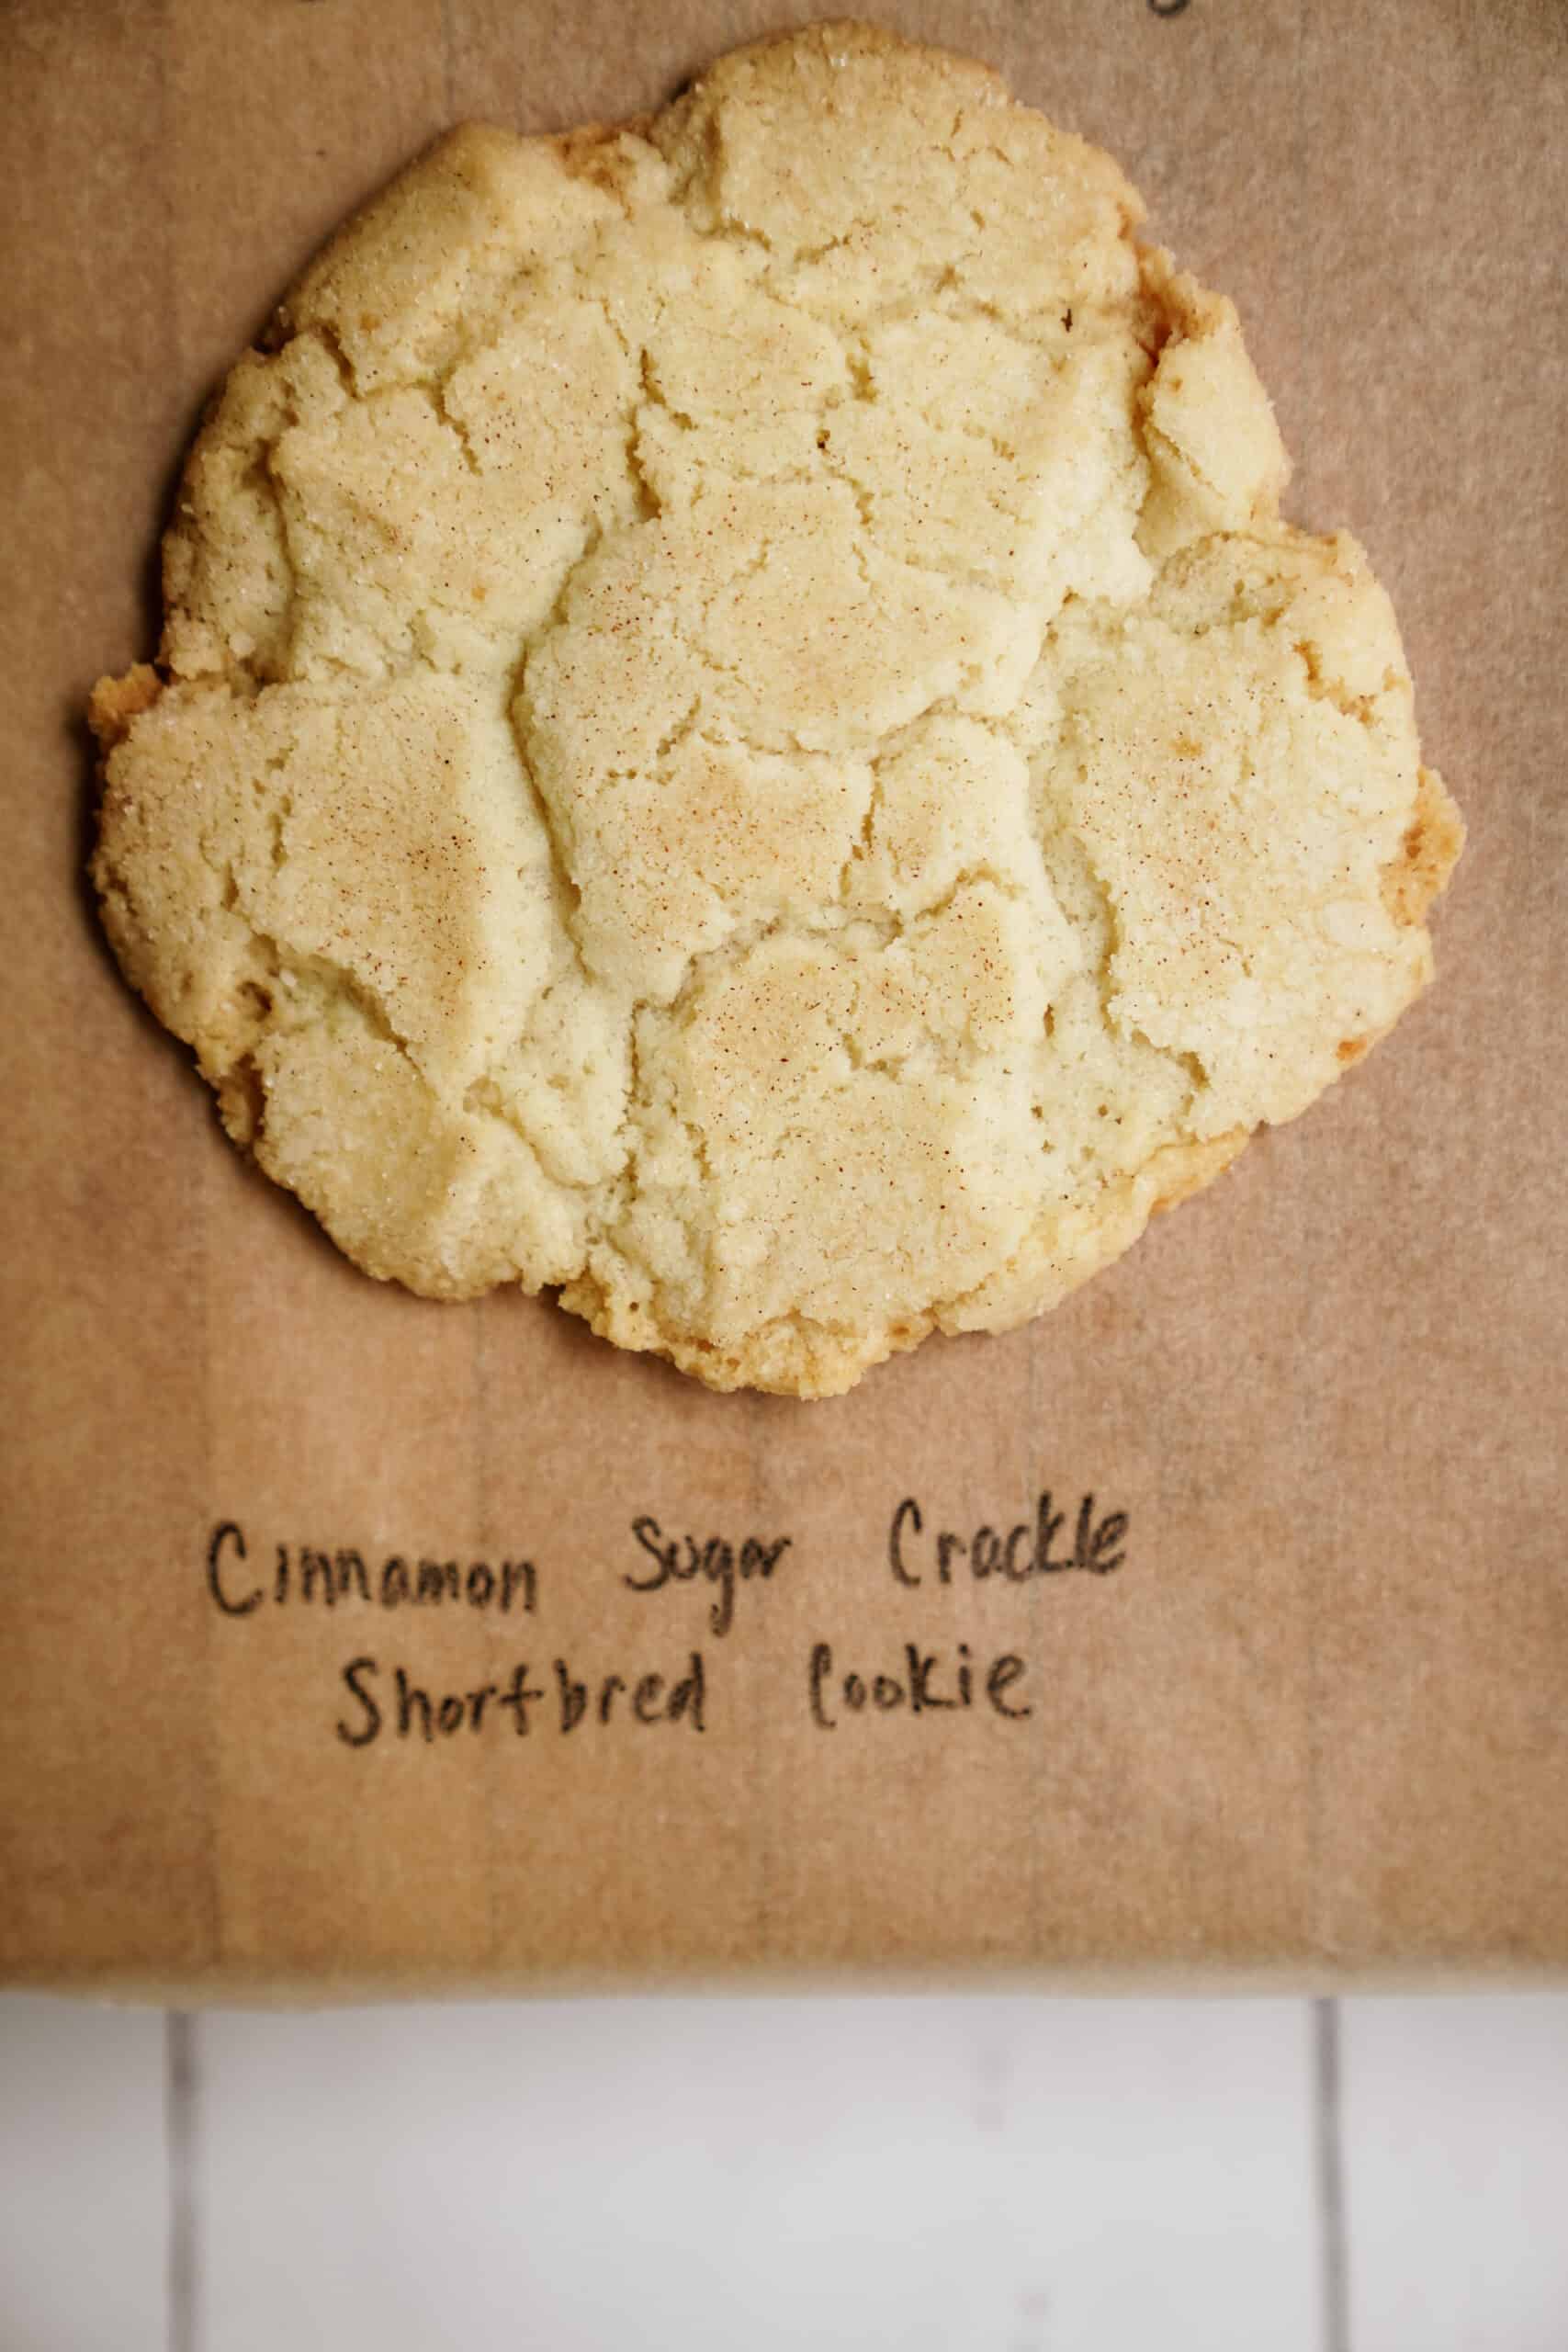 Cinnamon sugar crackle shortbread cookie made with cookie dough recipe